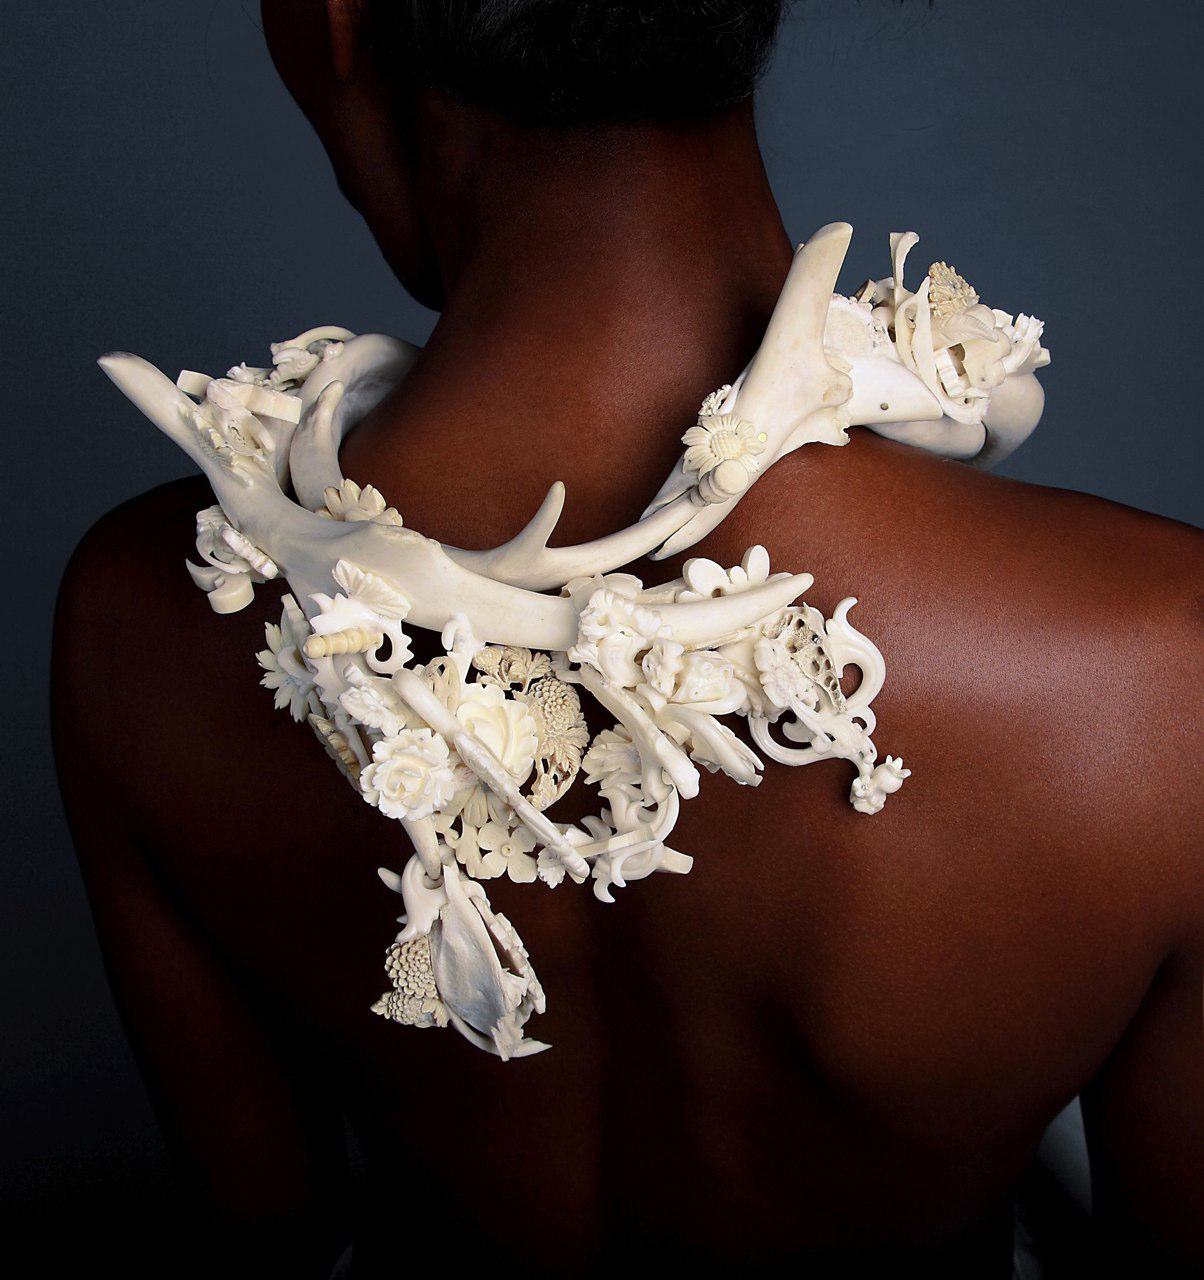 Jennifer Trask Bone Sculpture